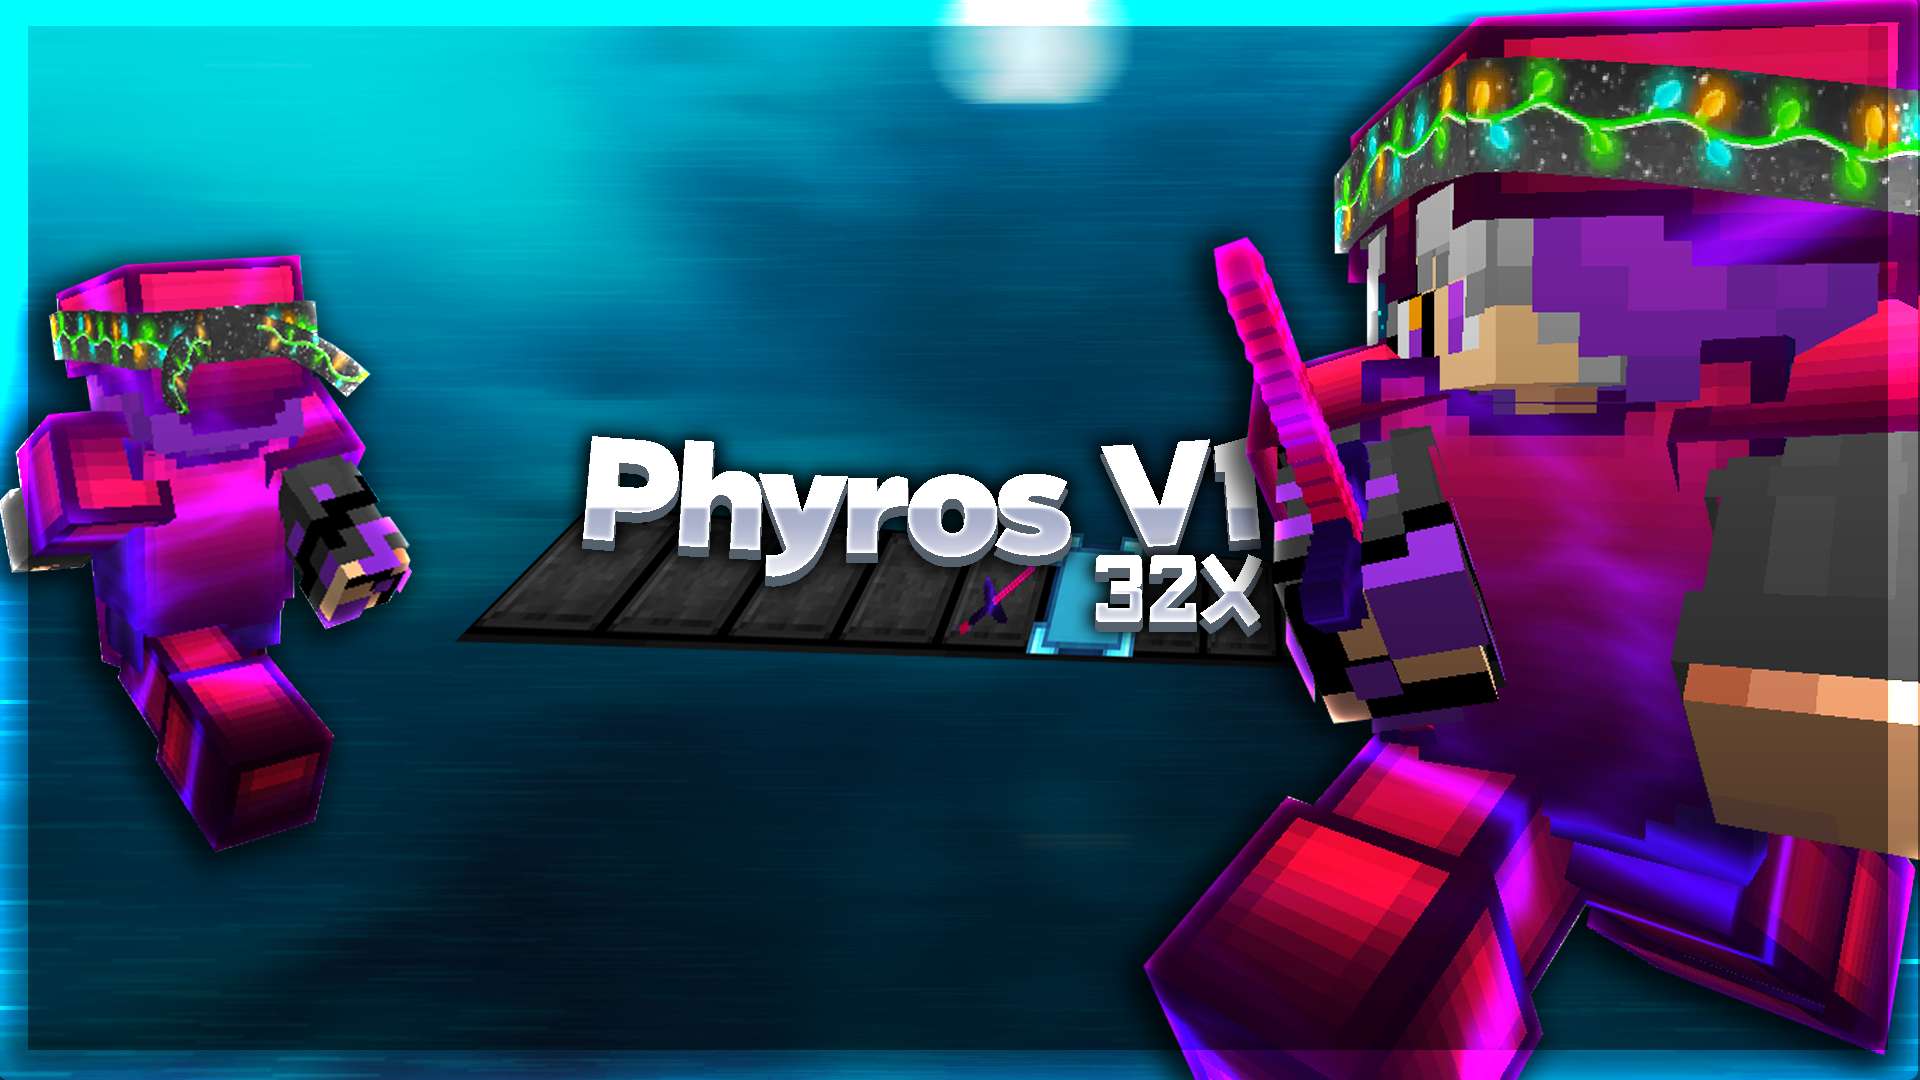 Gallery Image 1 for Phyros V1 on vVPRP